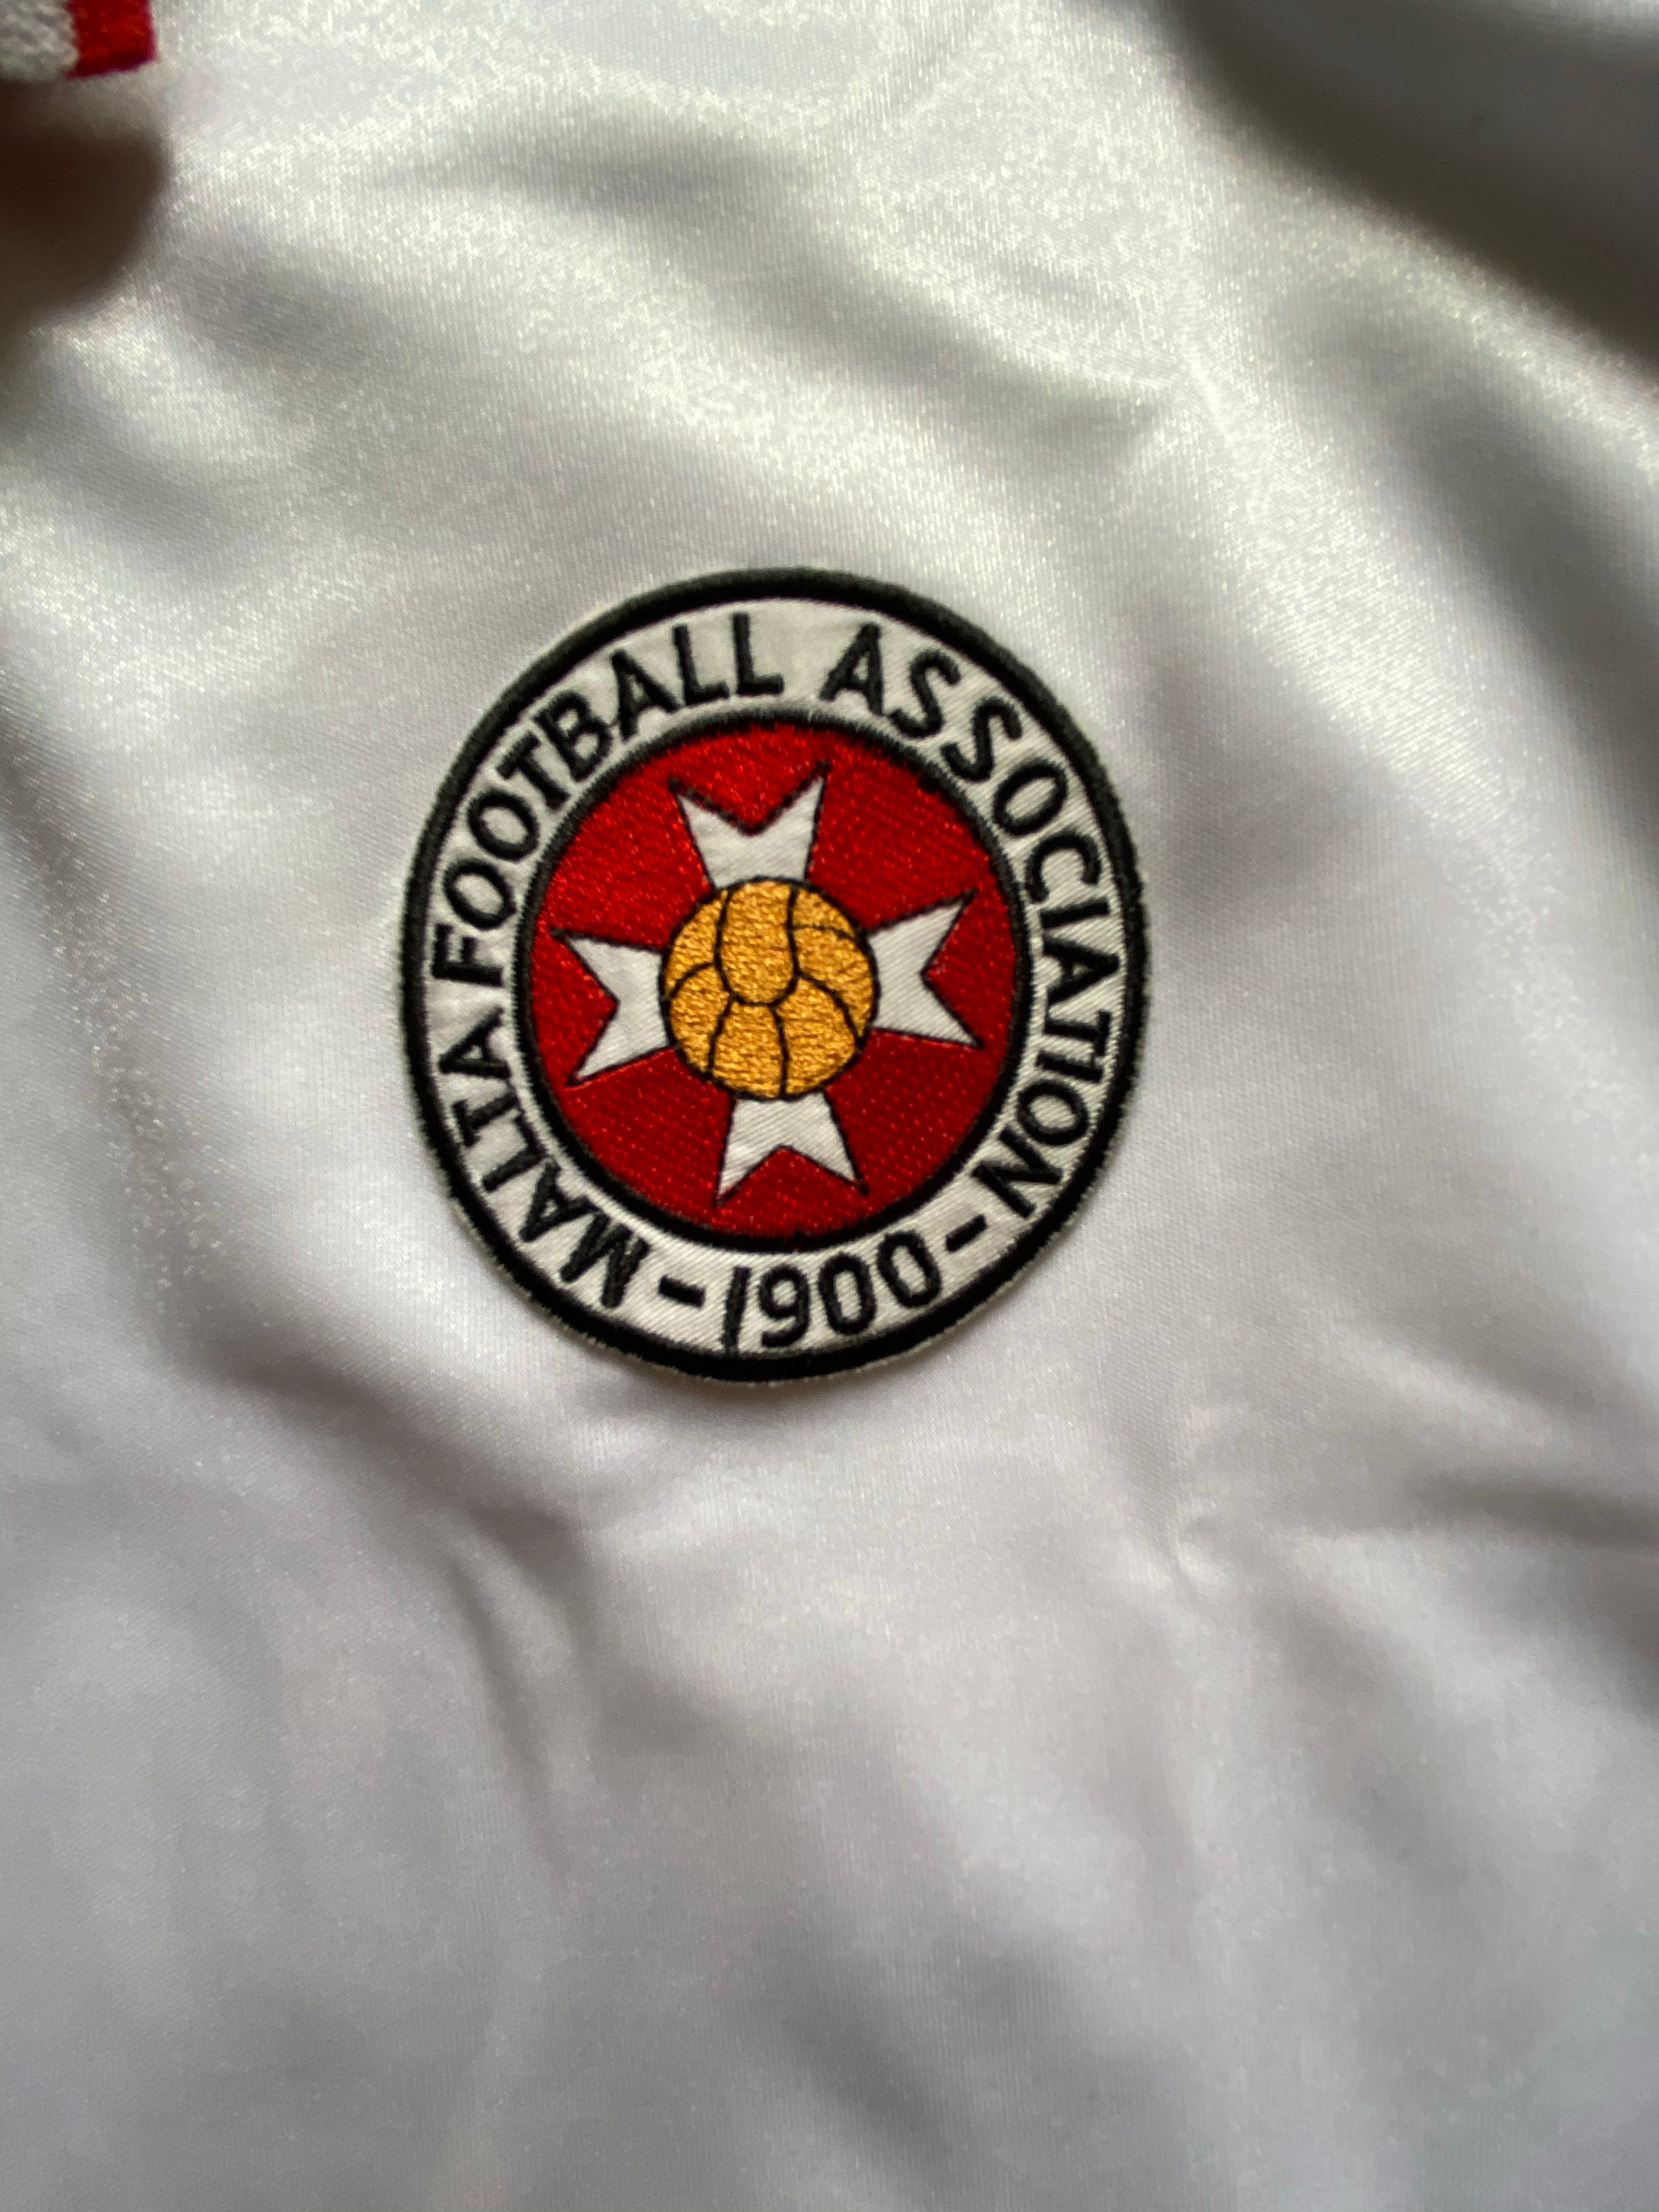 2001/02 Malta Away Shirt (S) 9/10